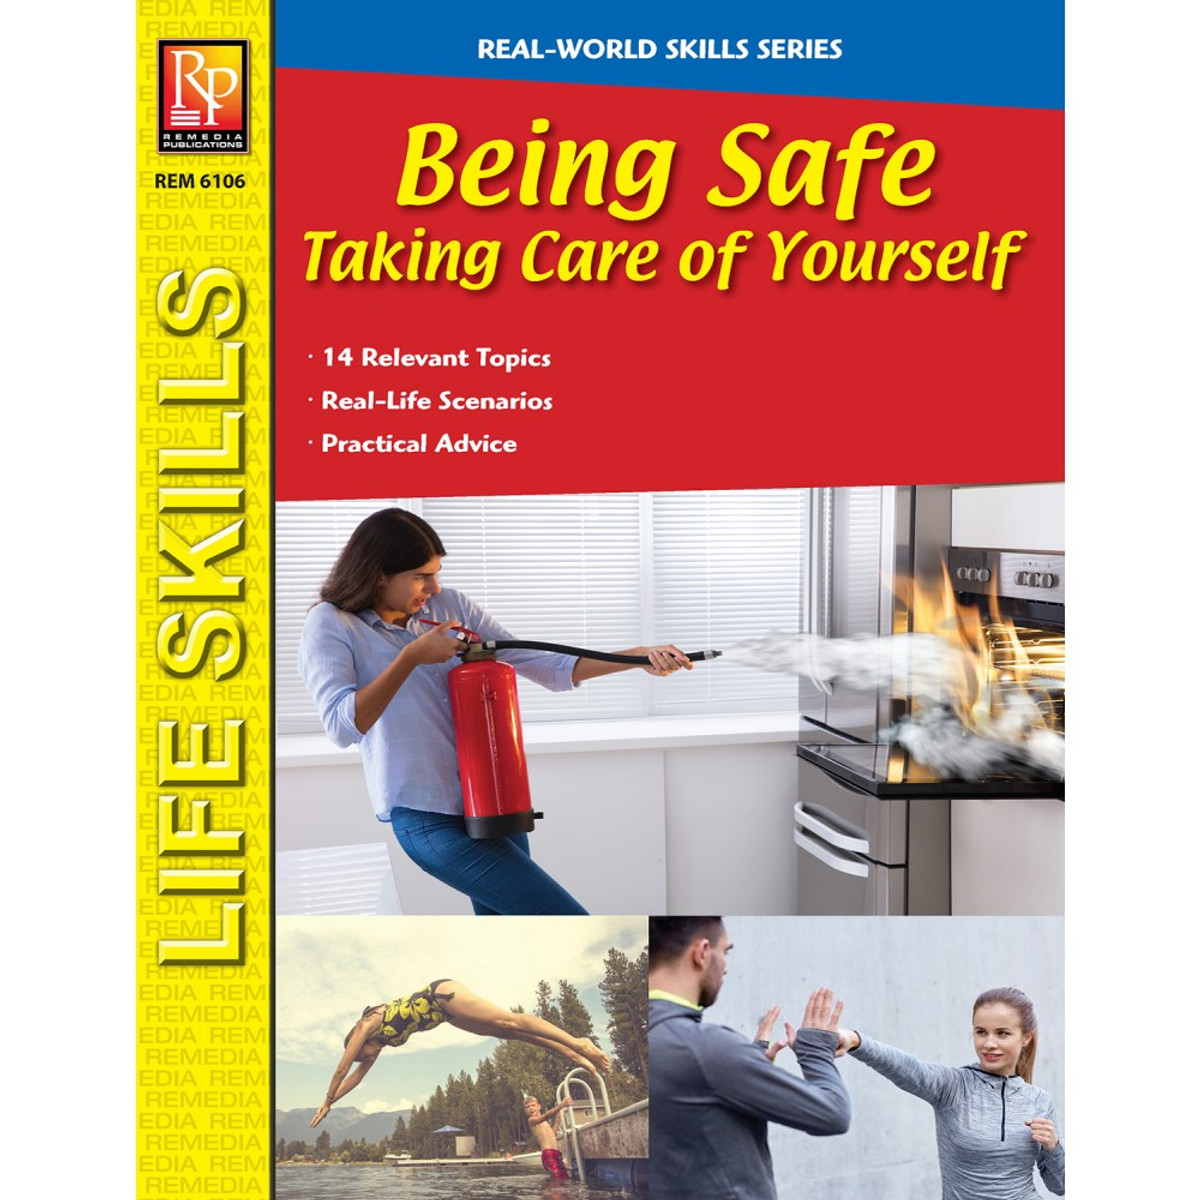 Real-World Skills: Being Safe